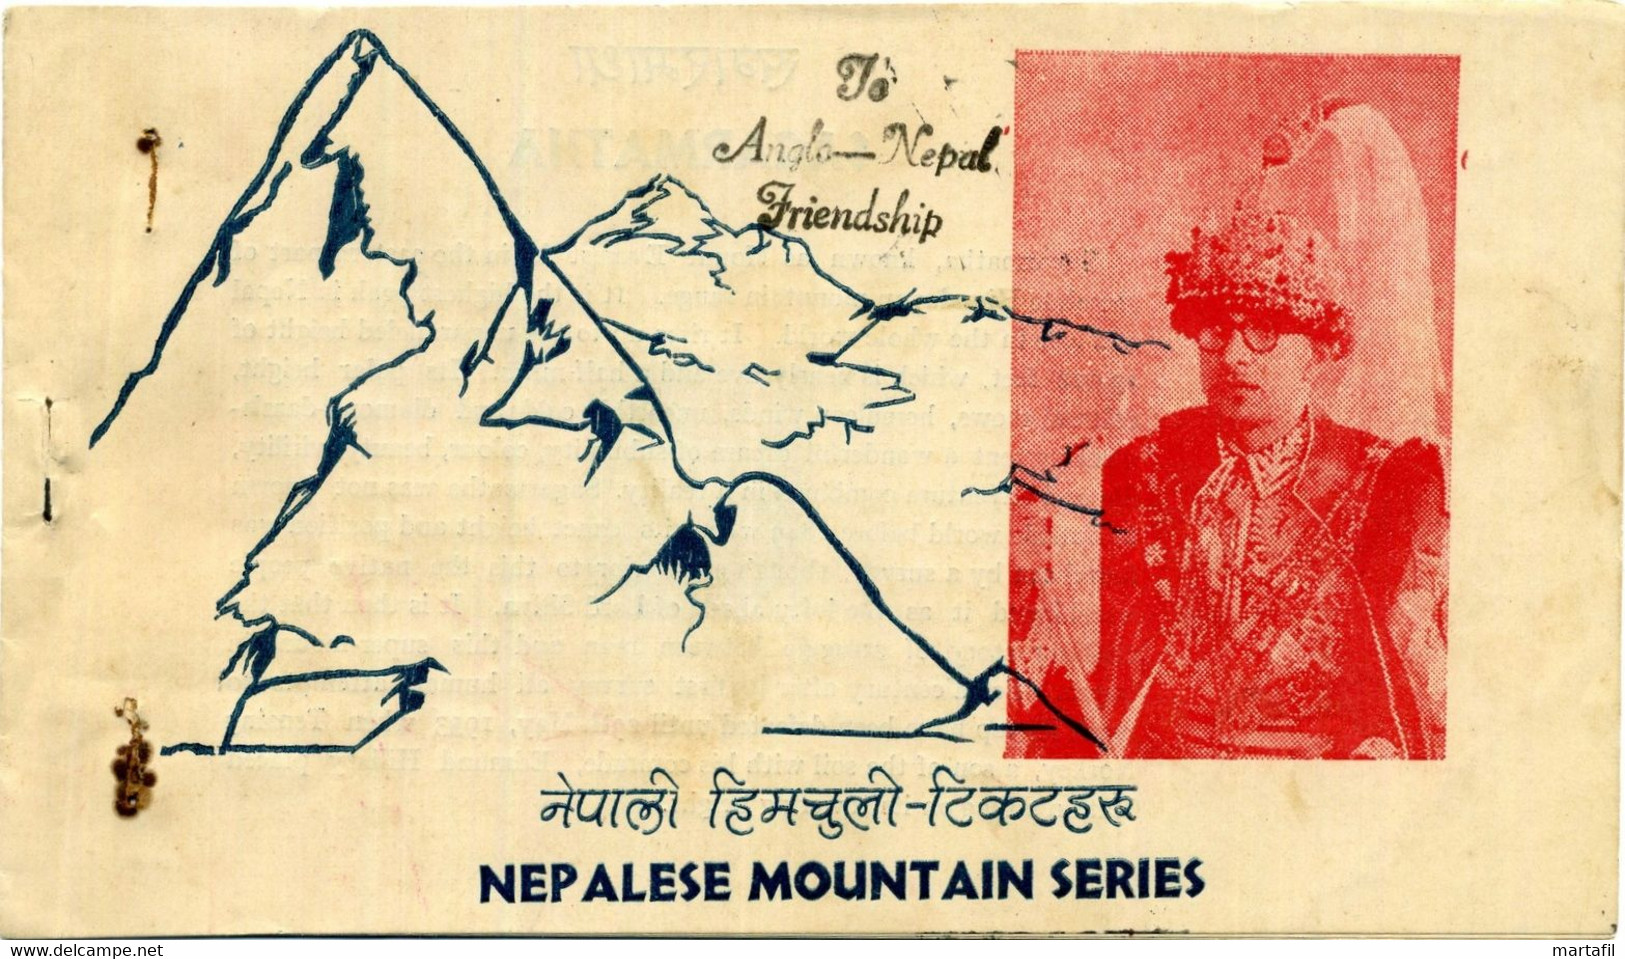 NEPAL Booklet "Nepalese Mountain Series" Anglo-Nepal Friendship (SAGARMATHA - MACHHAPUCHHRE - MANSALU) - Népal